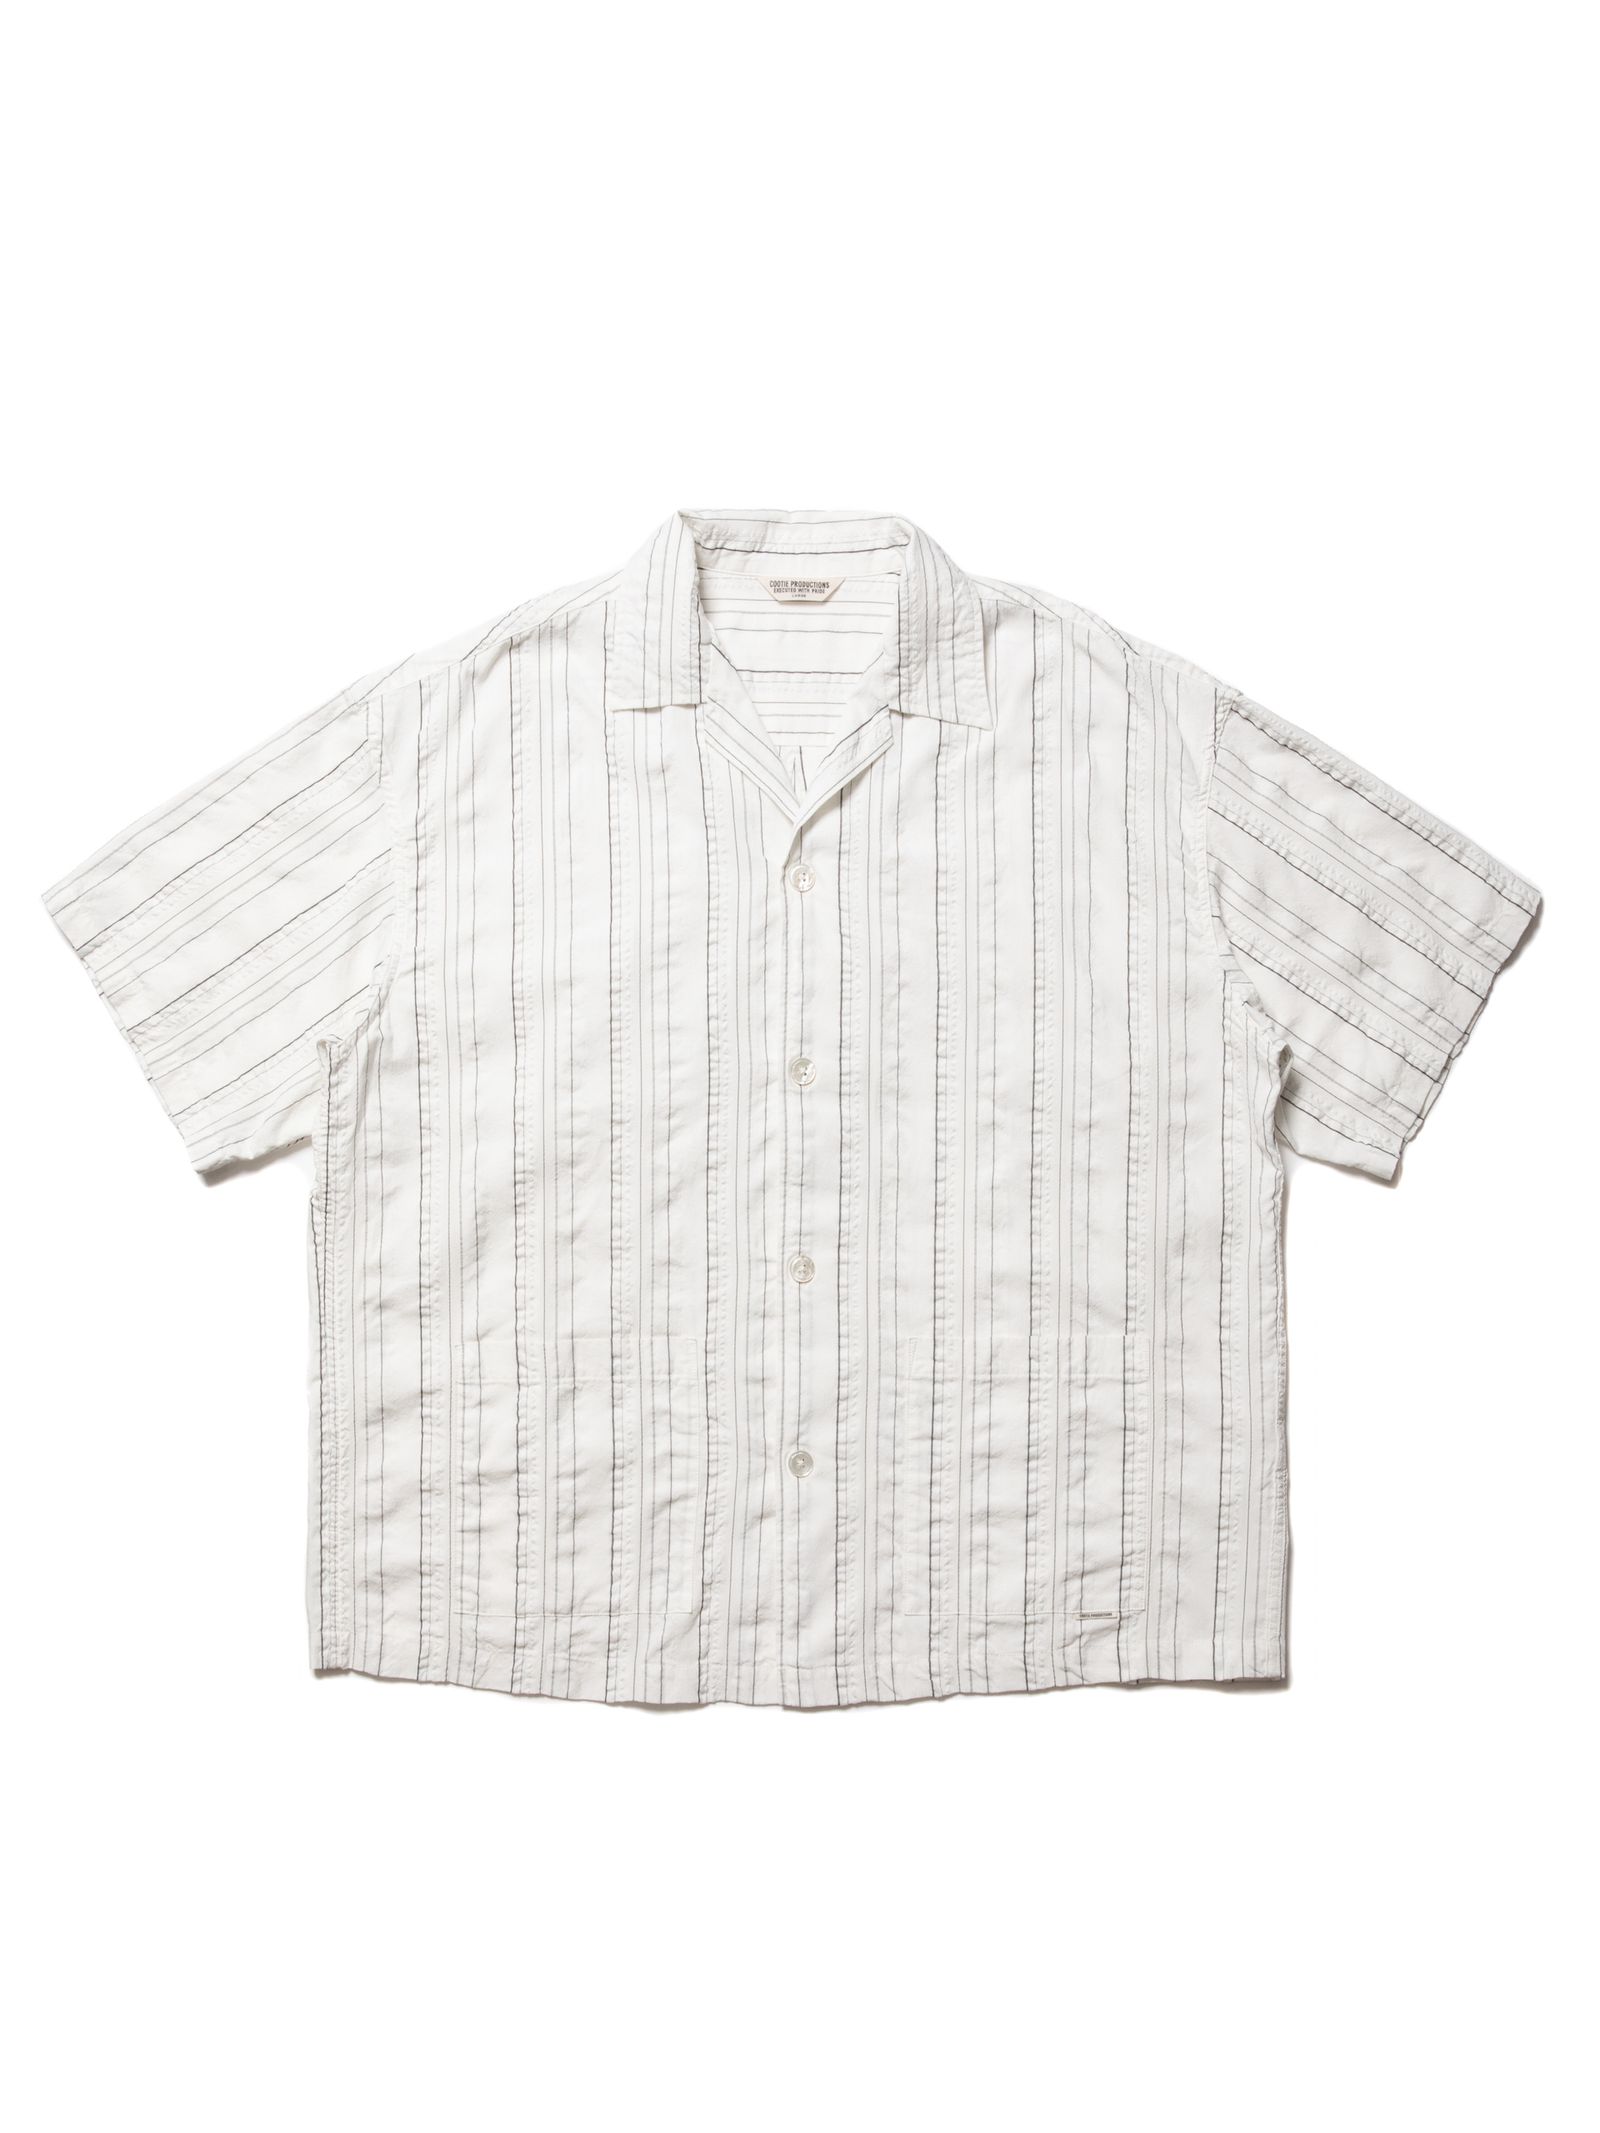 COOTIE PRODUCTIONS - Stripe Sucker Cloth Open Collar S/S Shirt ...